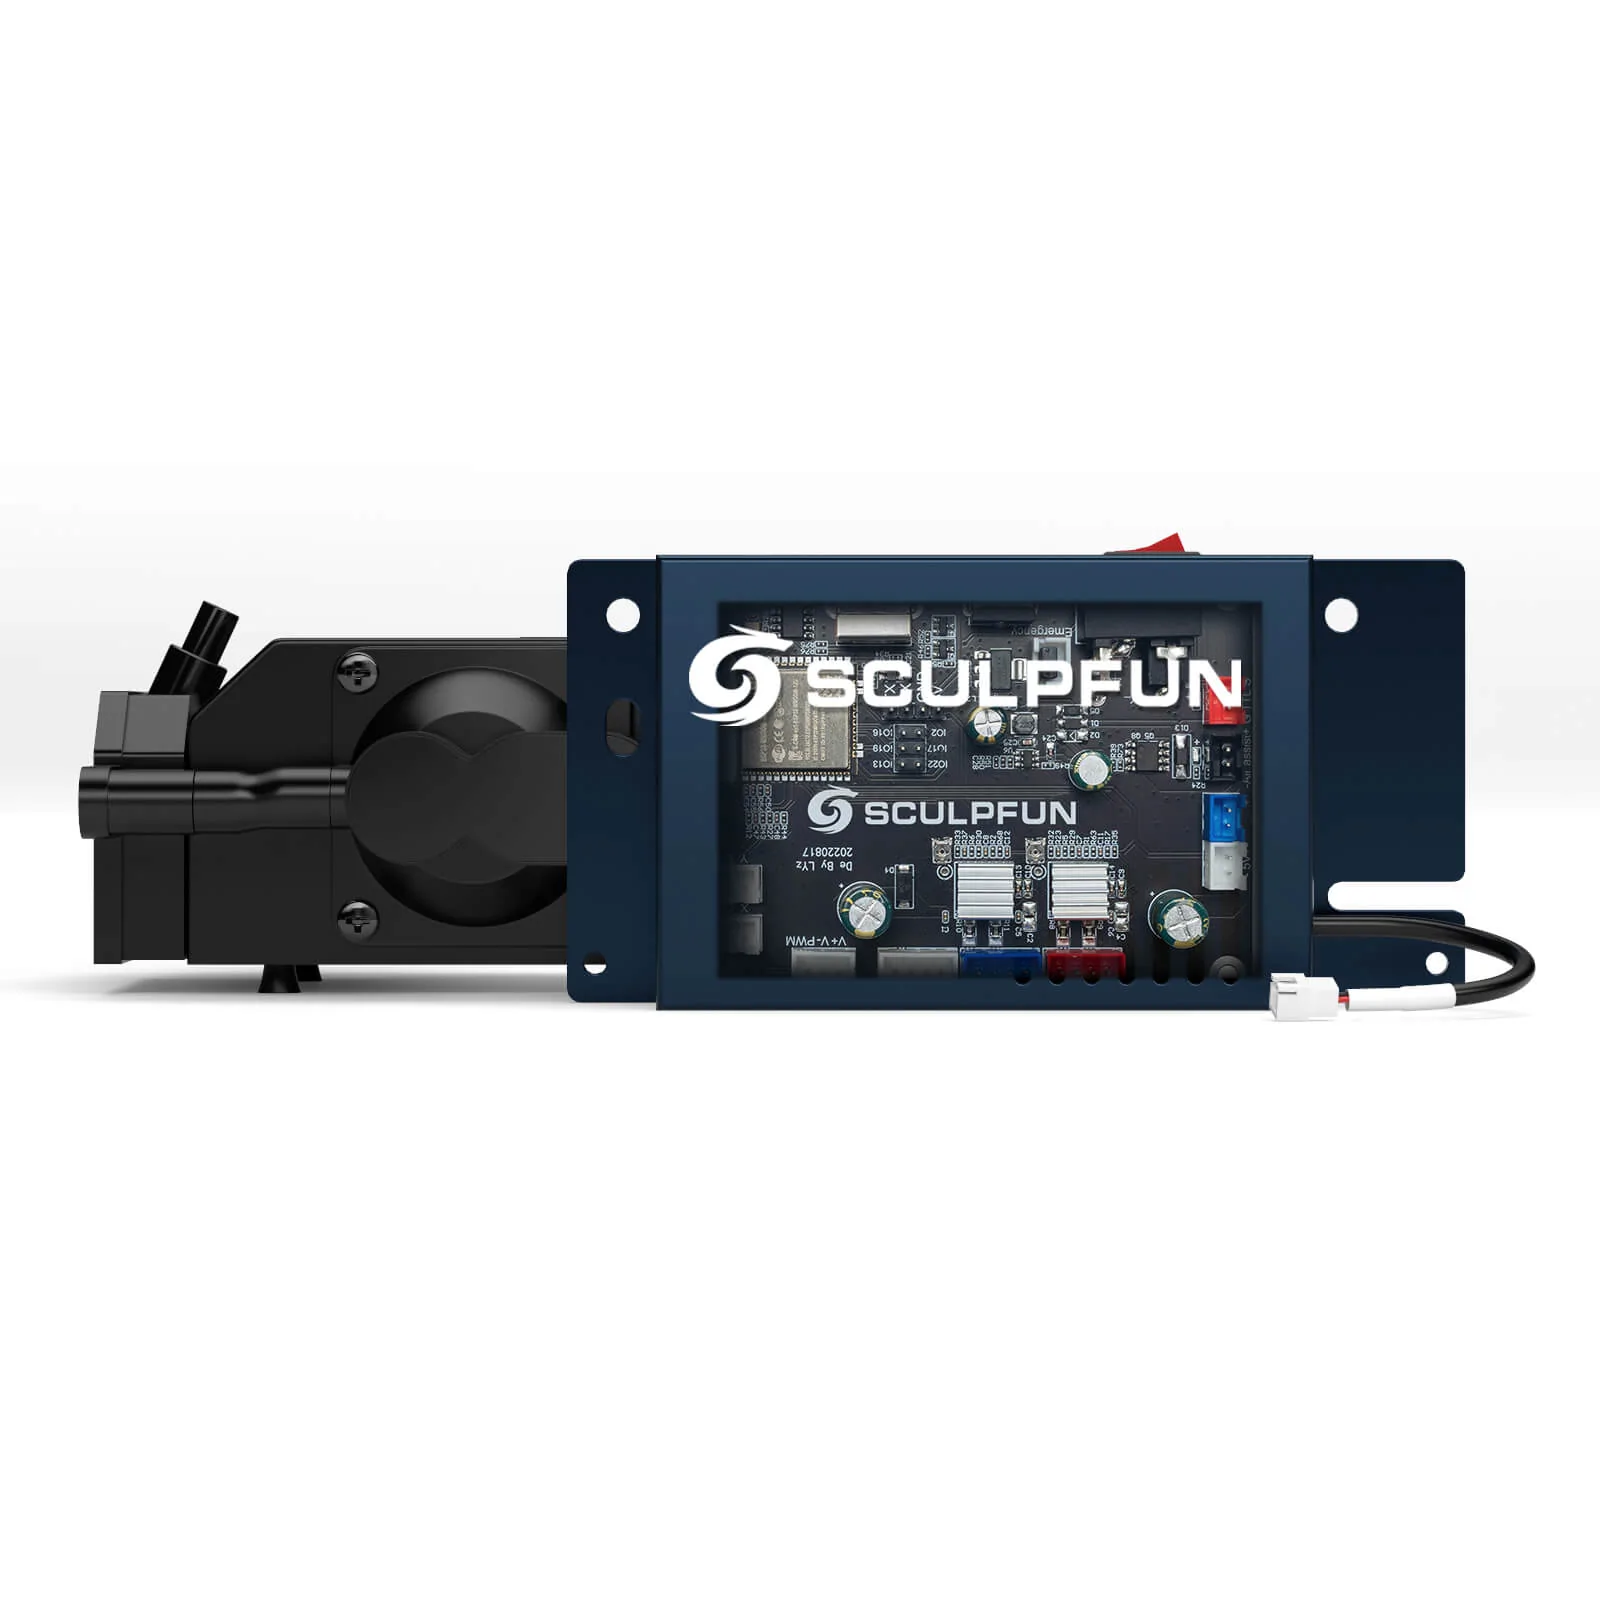 SCULPFUN S9/S10 Upgrade Kit Automatic Air Assist System Kit 12V Version With 32bit Mainboard & 30min/Min Air Pump